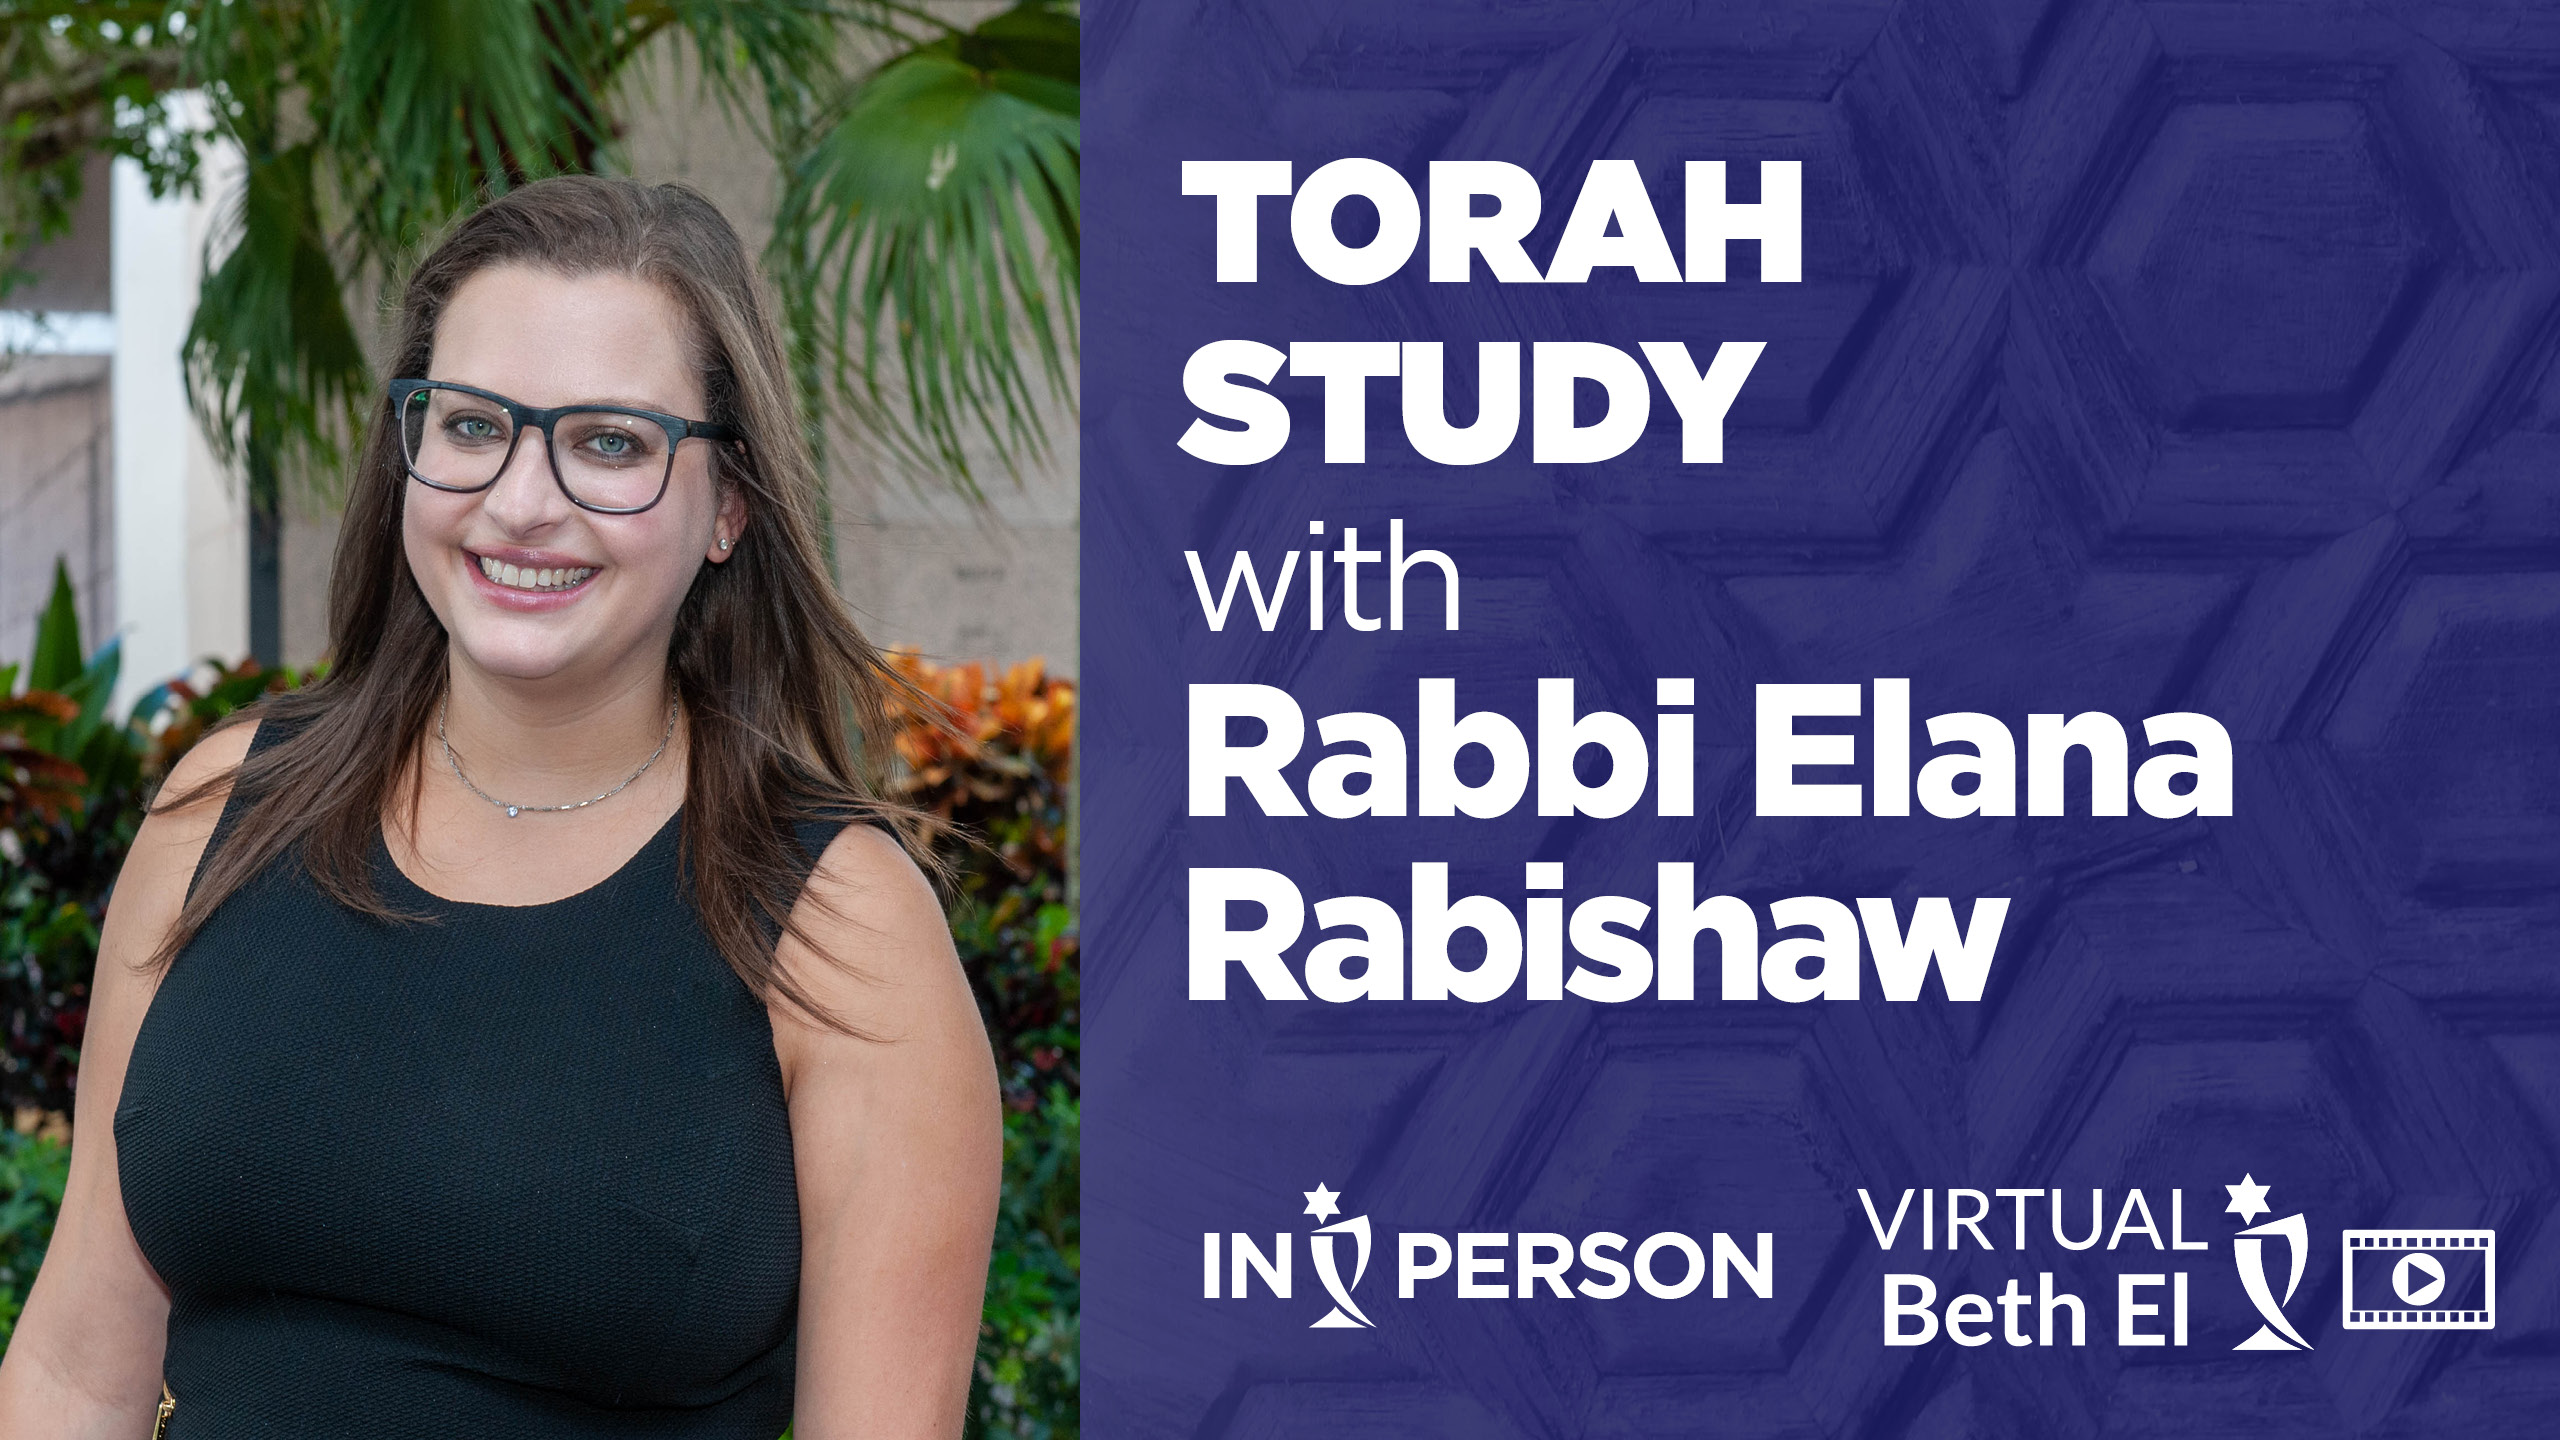 Torah Study with Rabbi Elana Rabishaw event graphic for Temple Beth El of Boca Raton